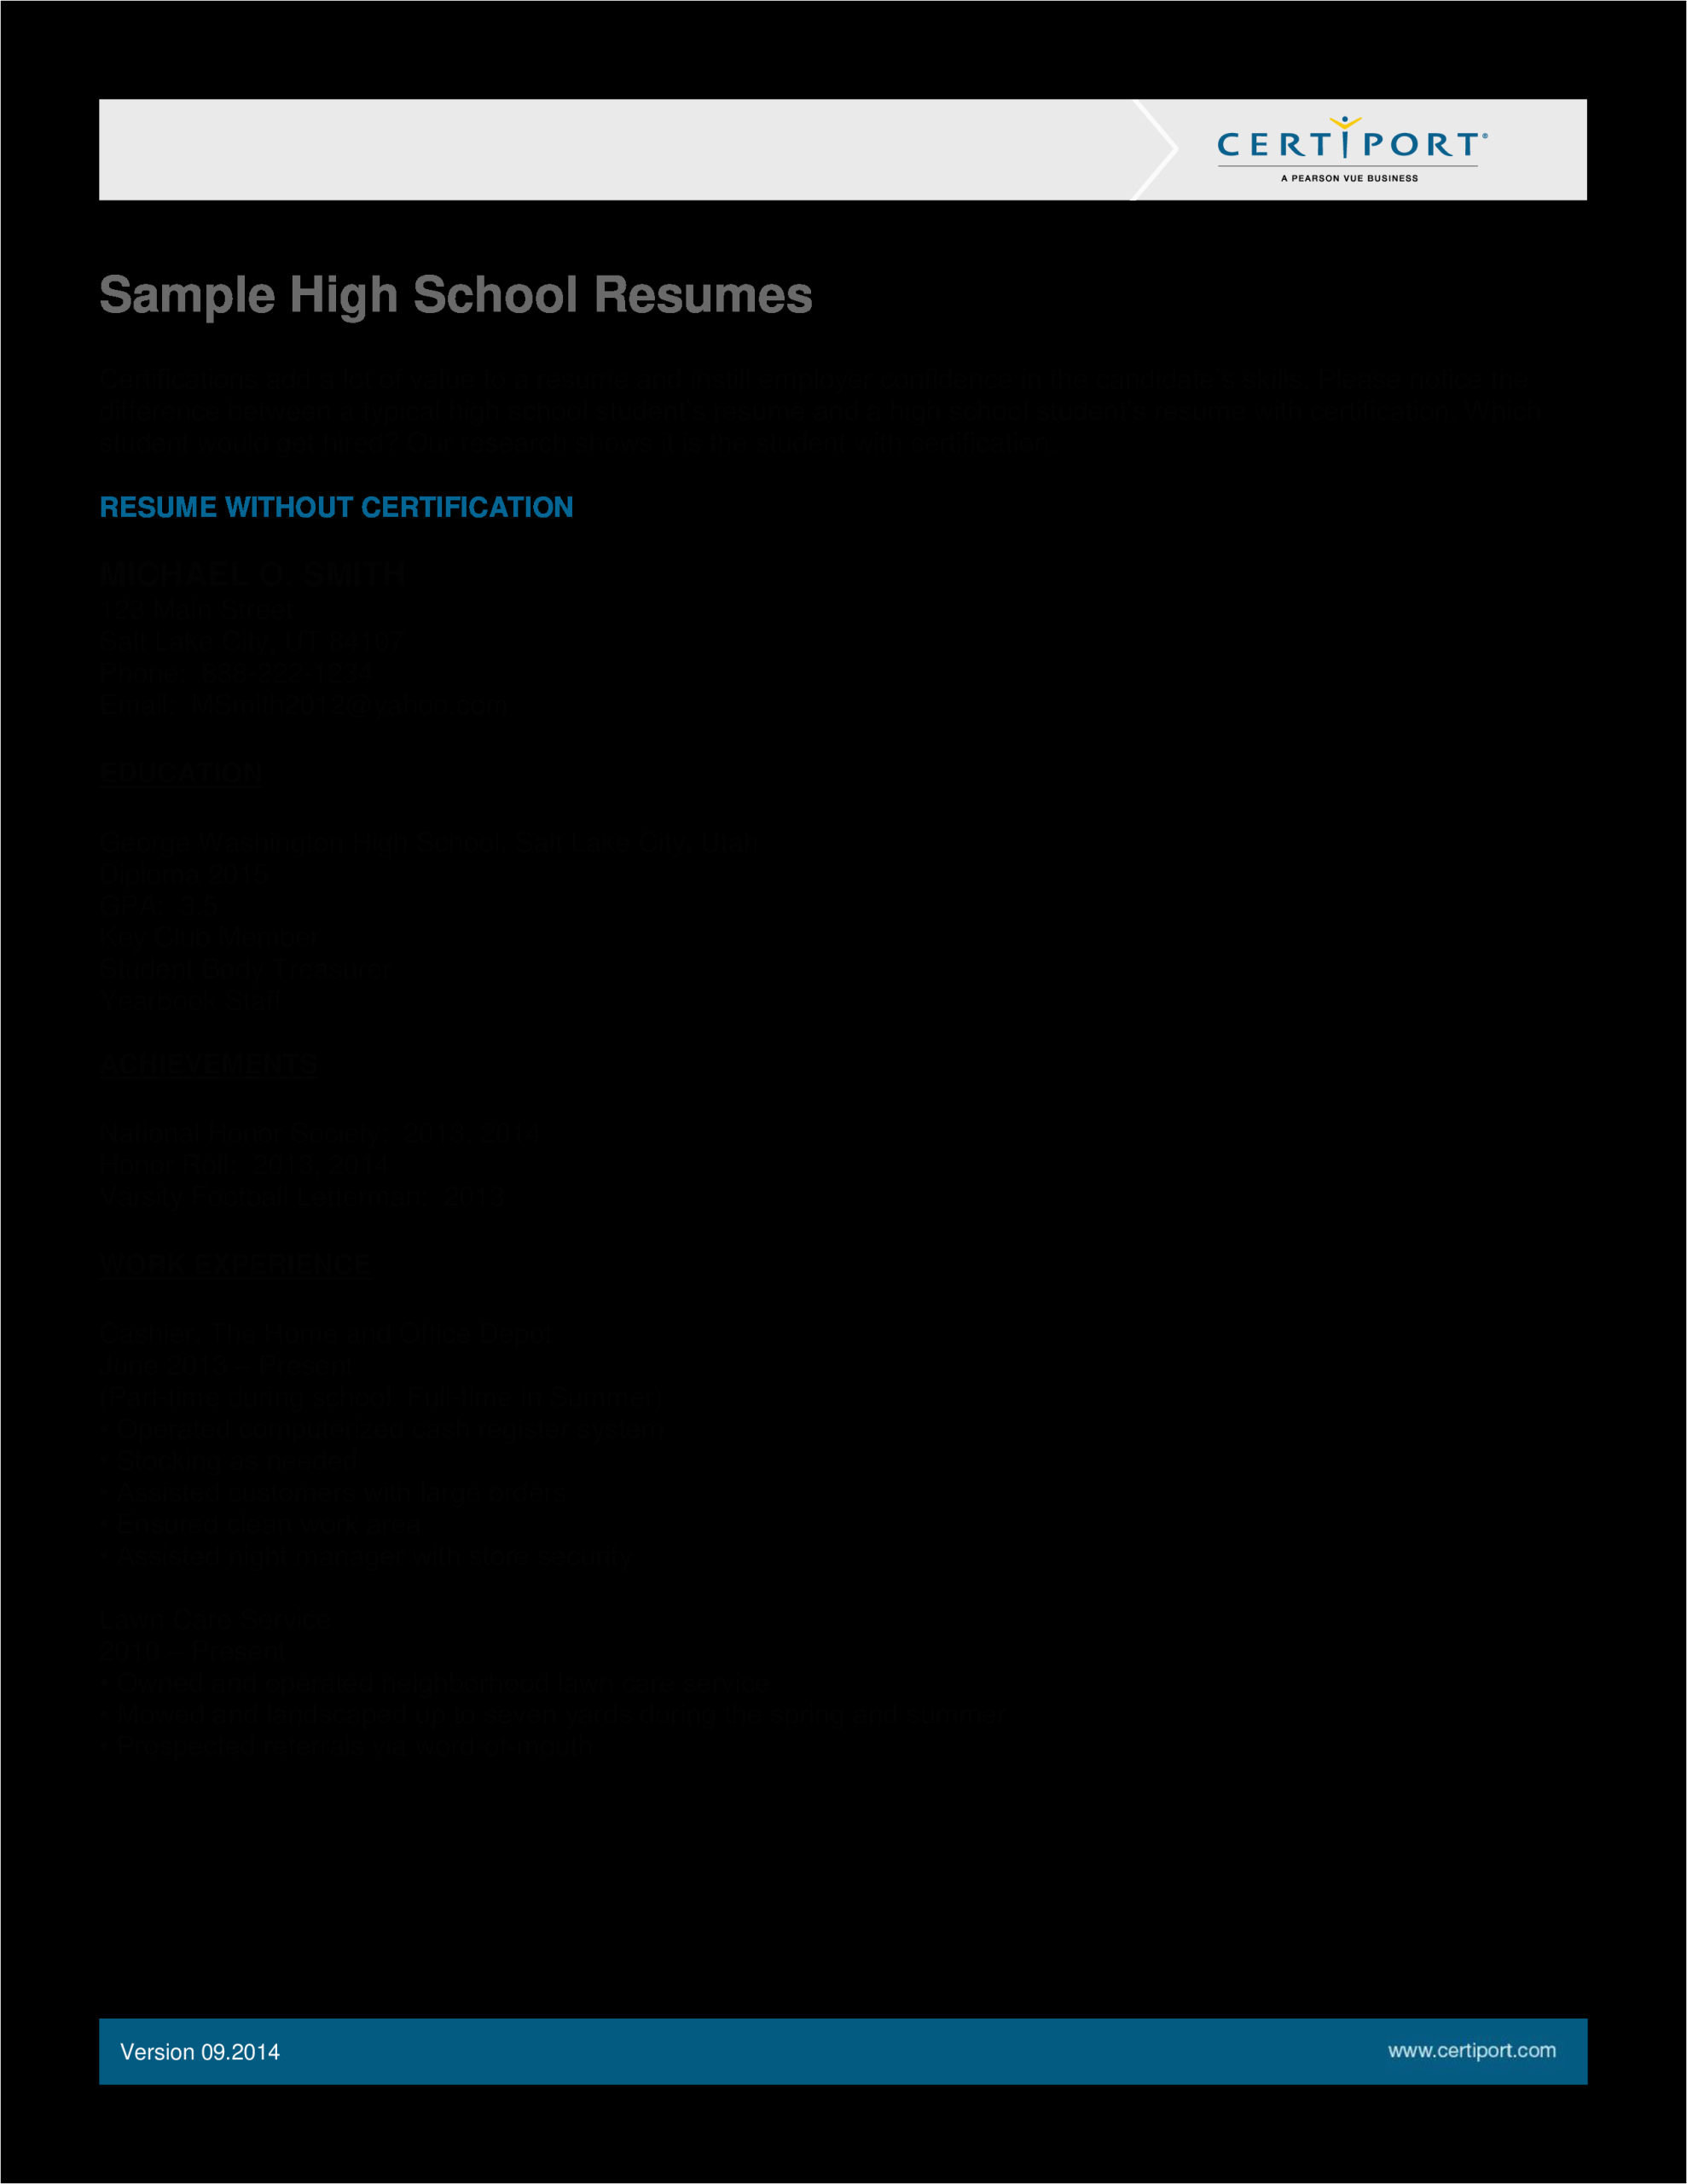 Samples Of A High School Resume Sample High School Resume